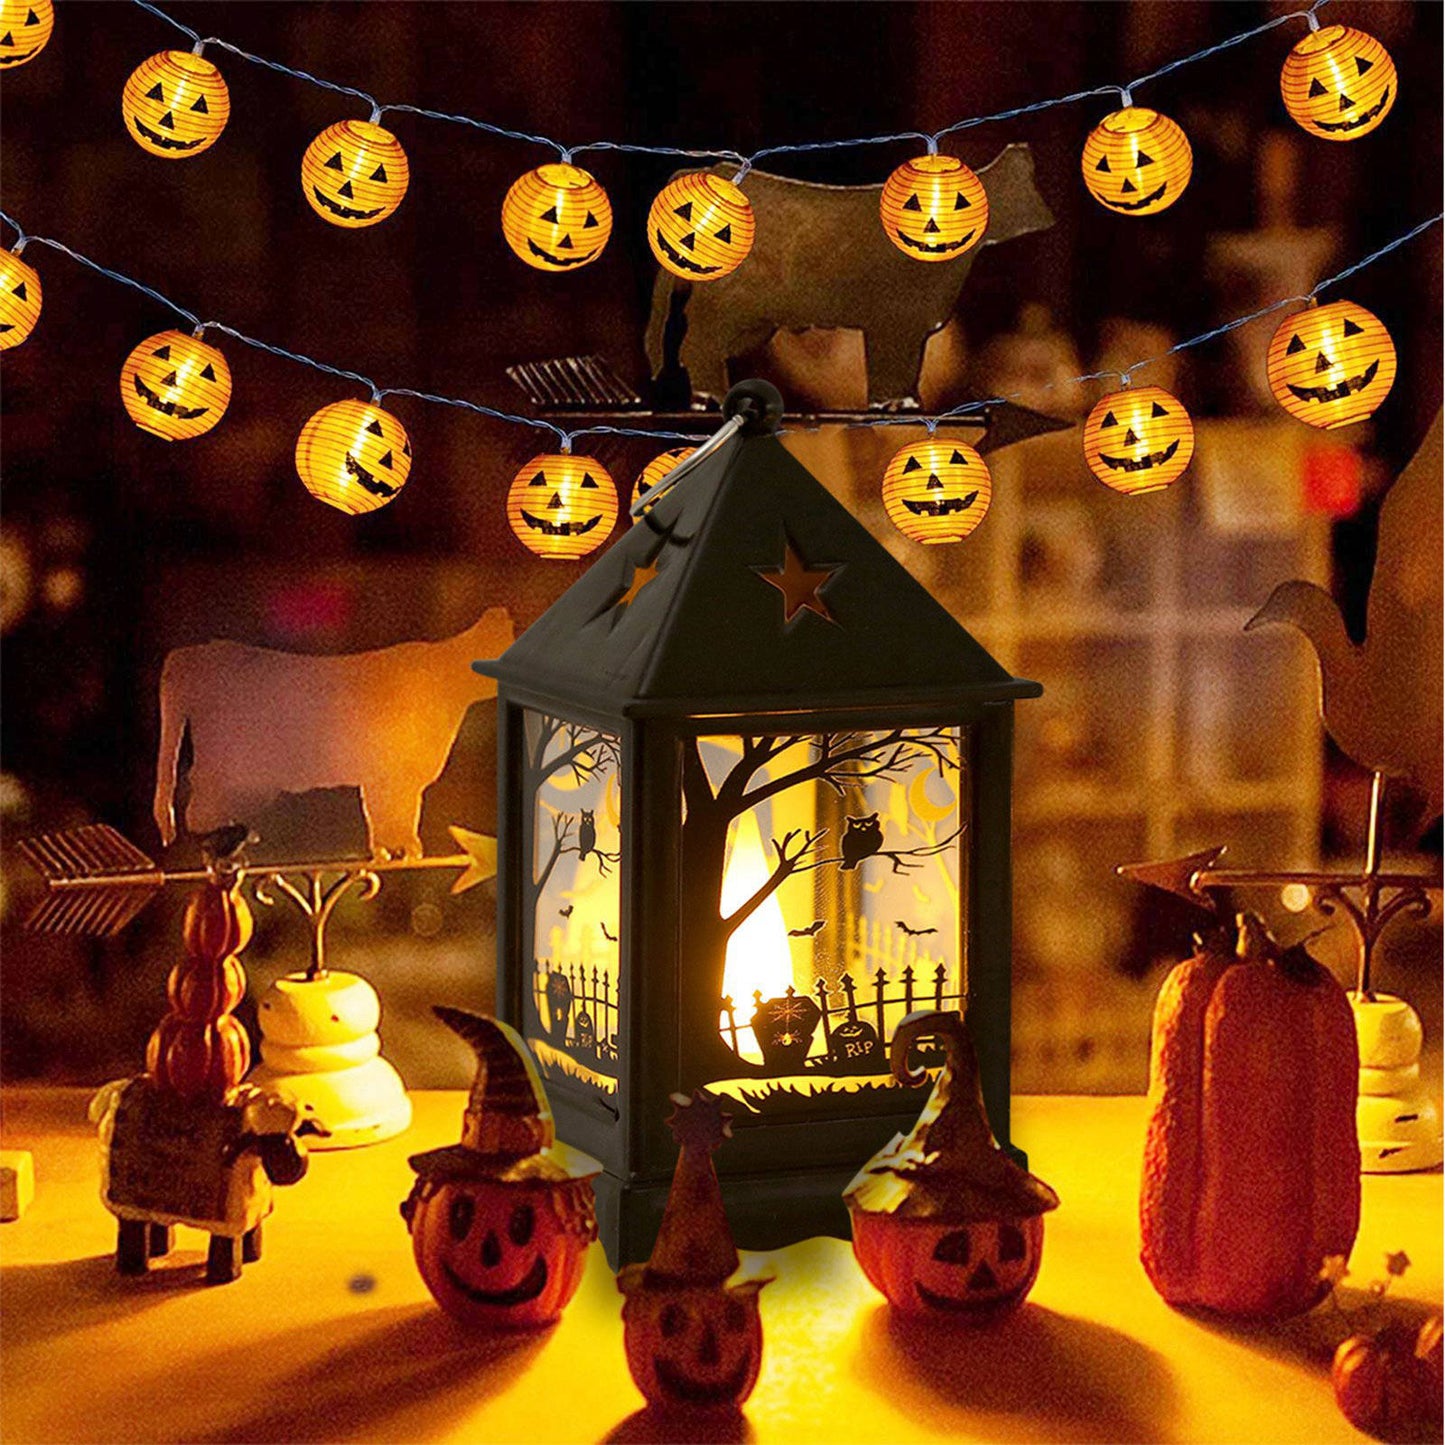 Halloween decorations, Night Light Festival decorations, suitable for Halloween celebration parties, ghosts